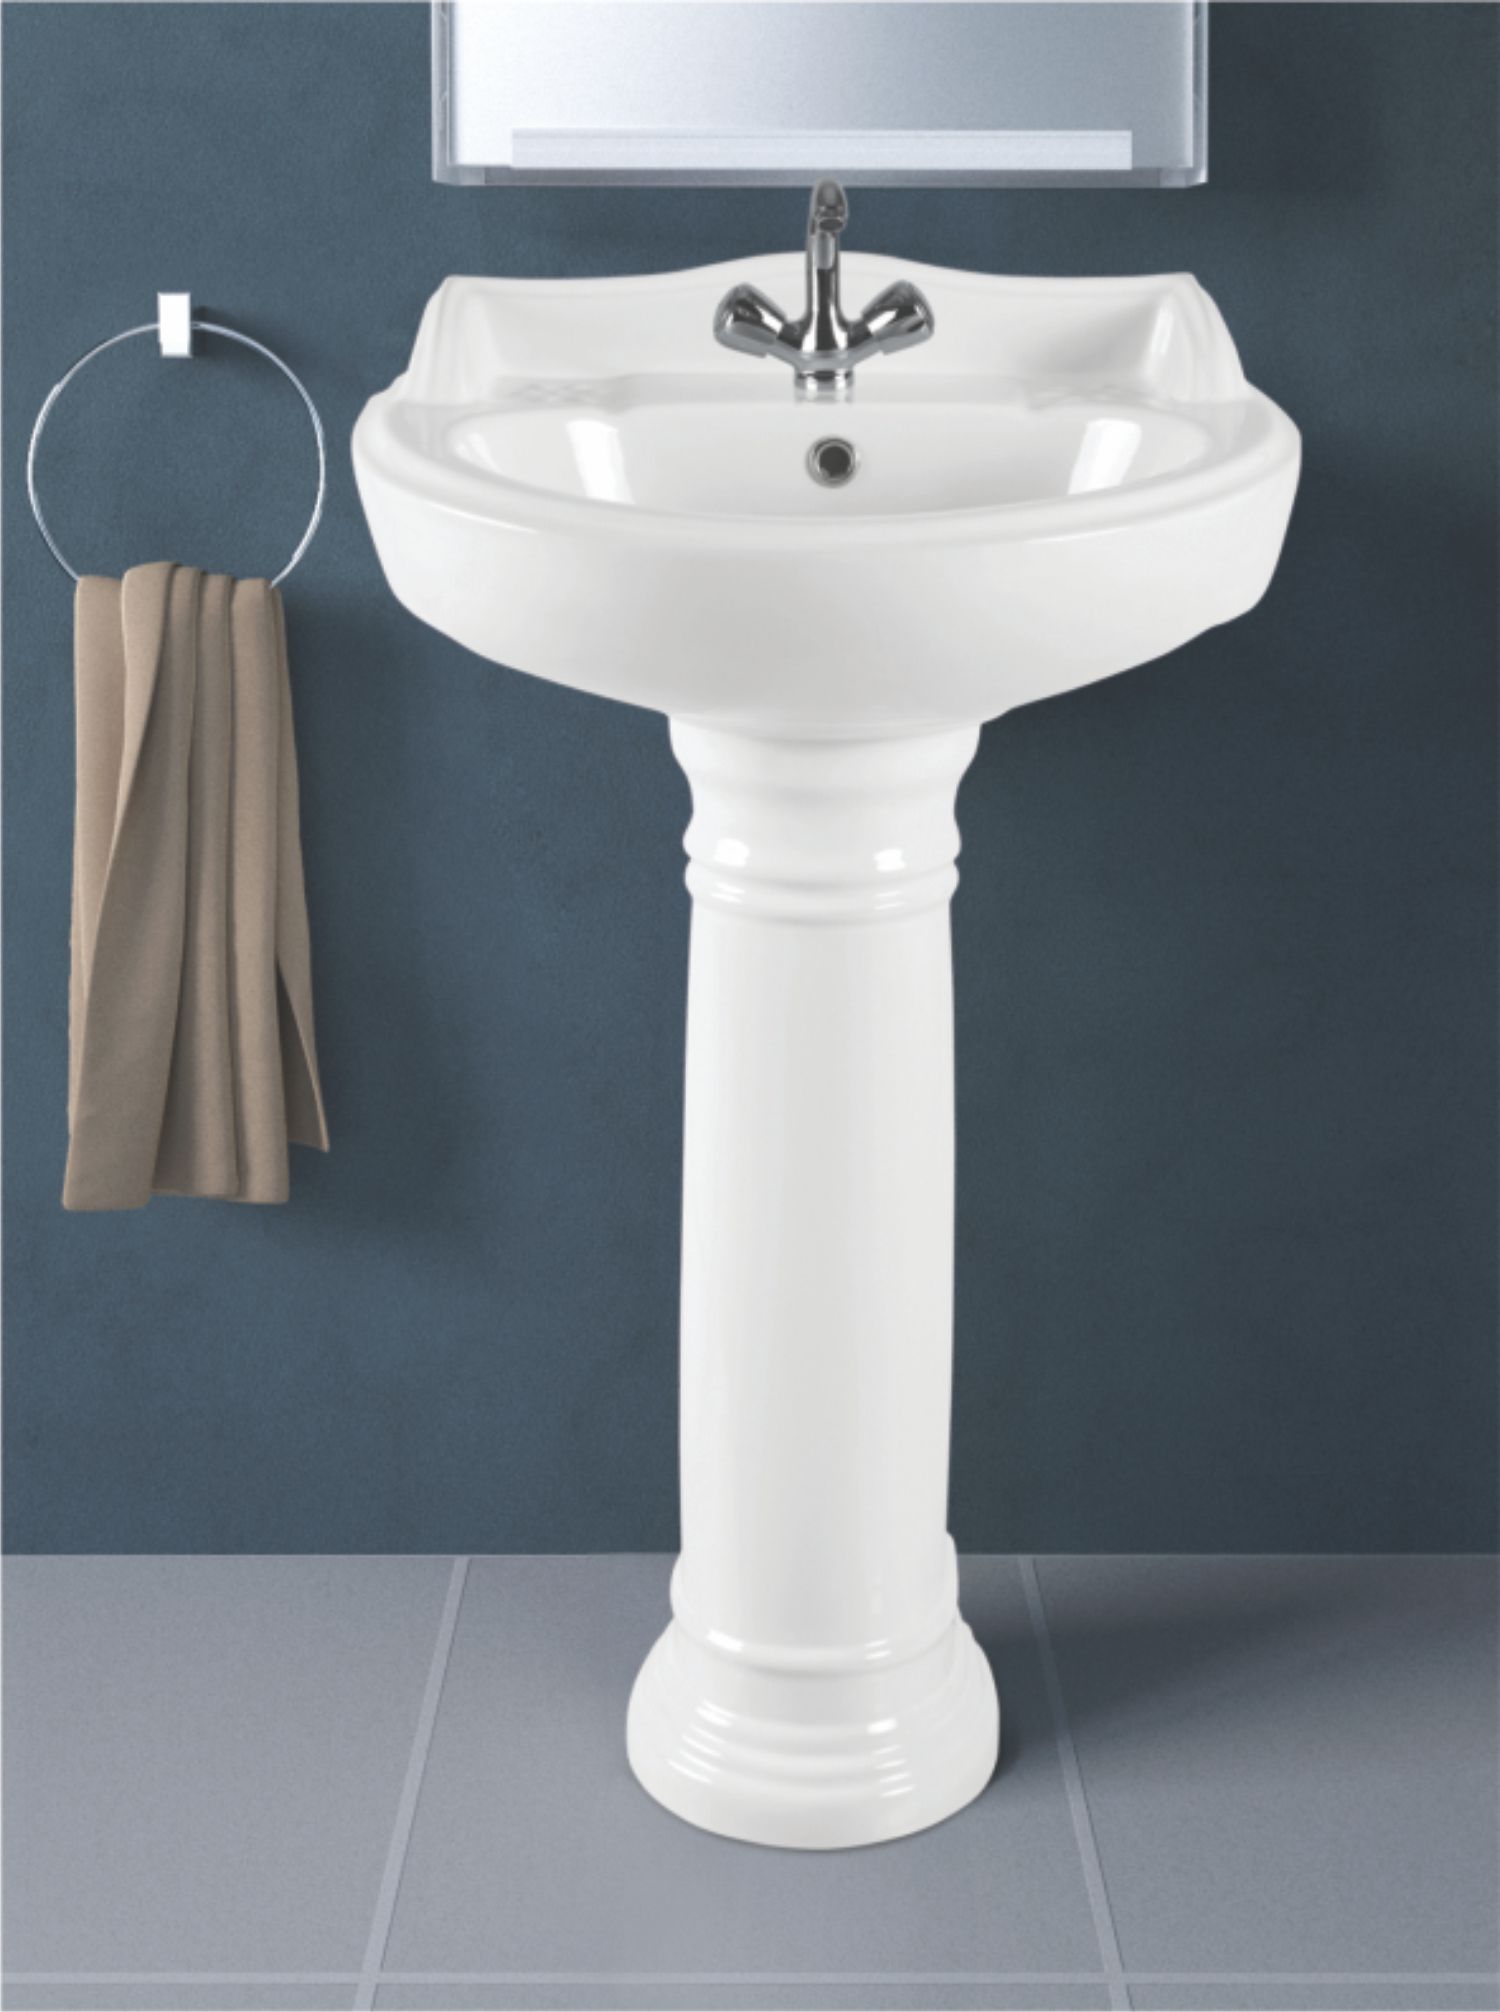 Wholesale Wash Basin with Pedestal Supplier